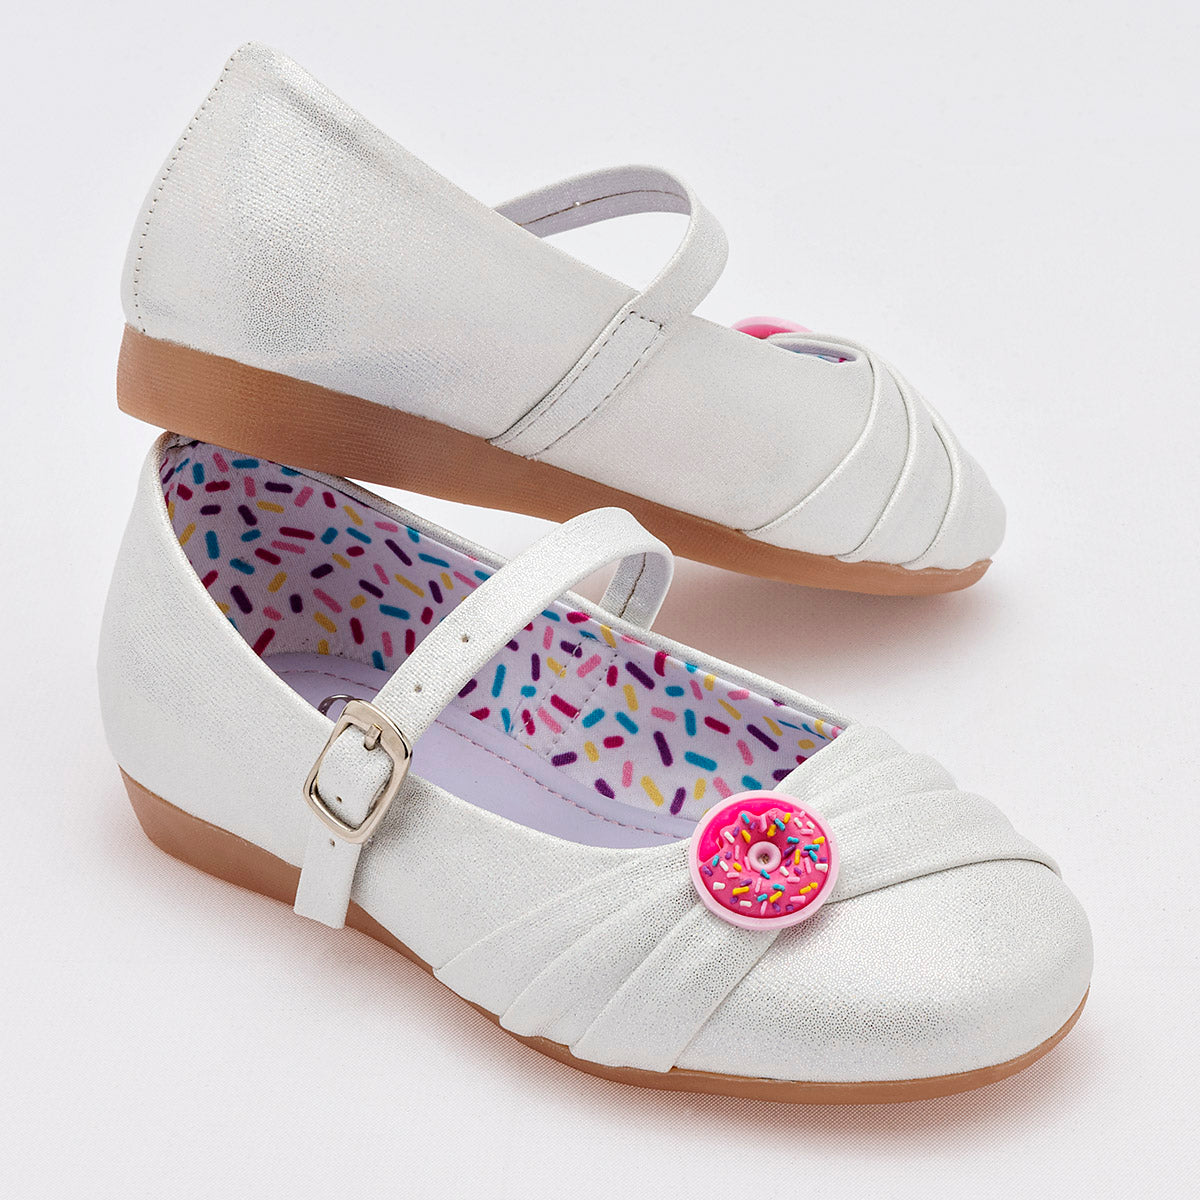 Pakar.com - Mayo: Regalos para mamá | Zapato para niña cod-120612